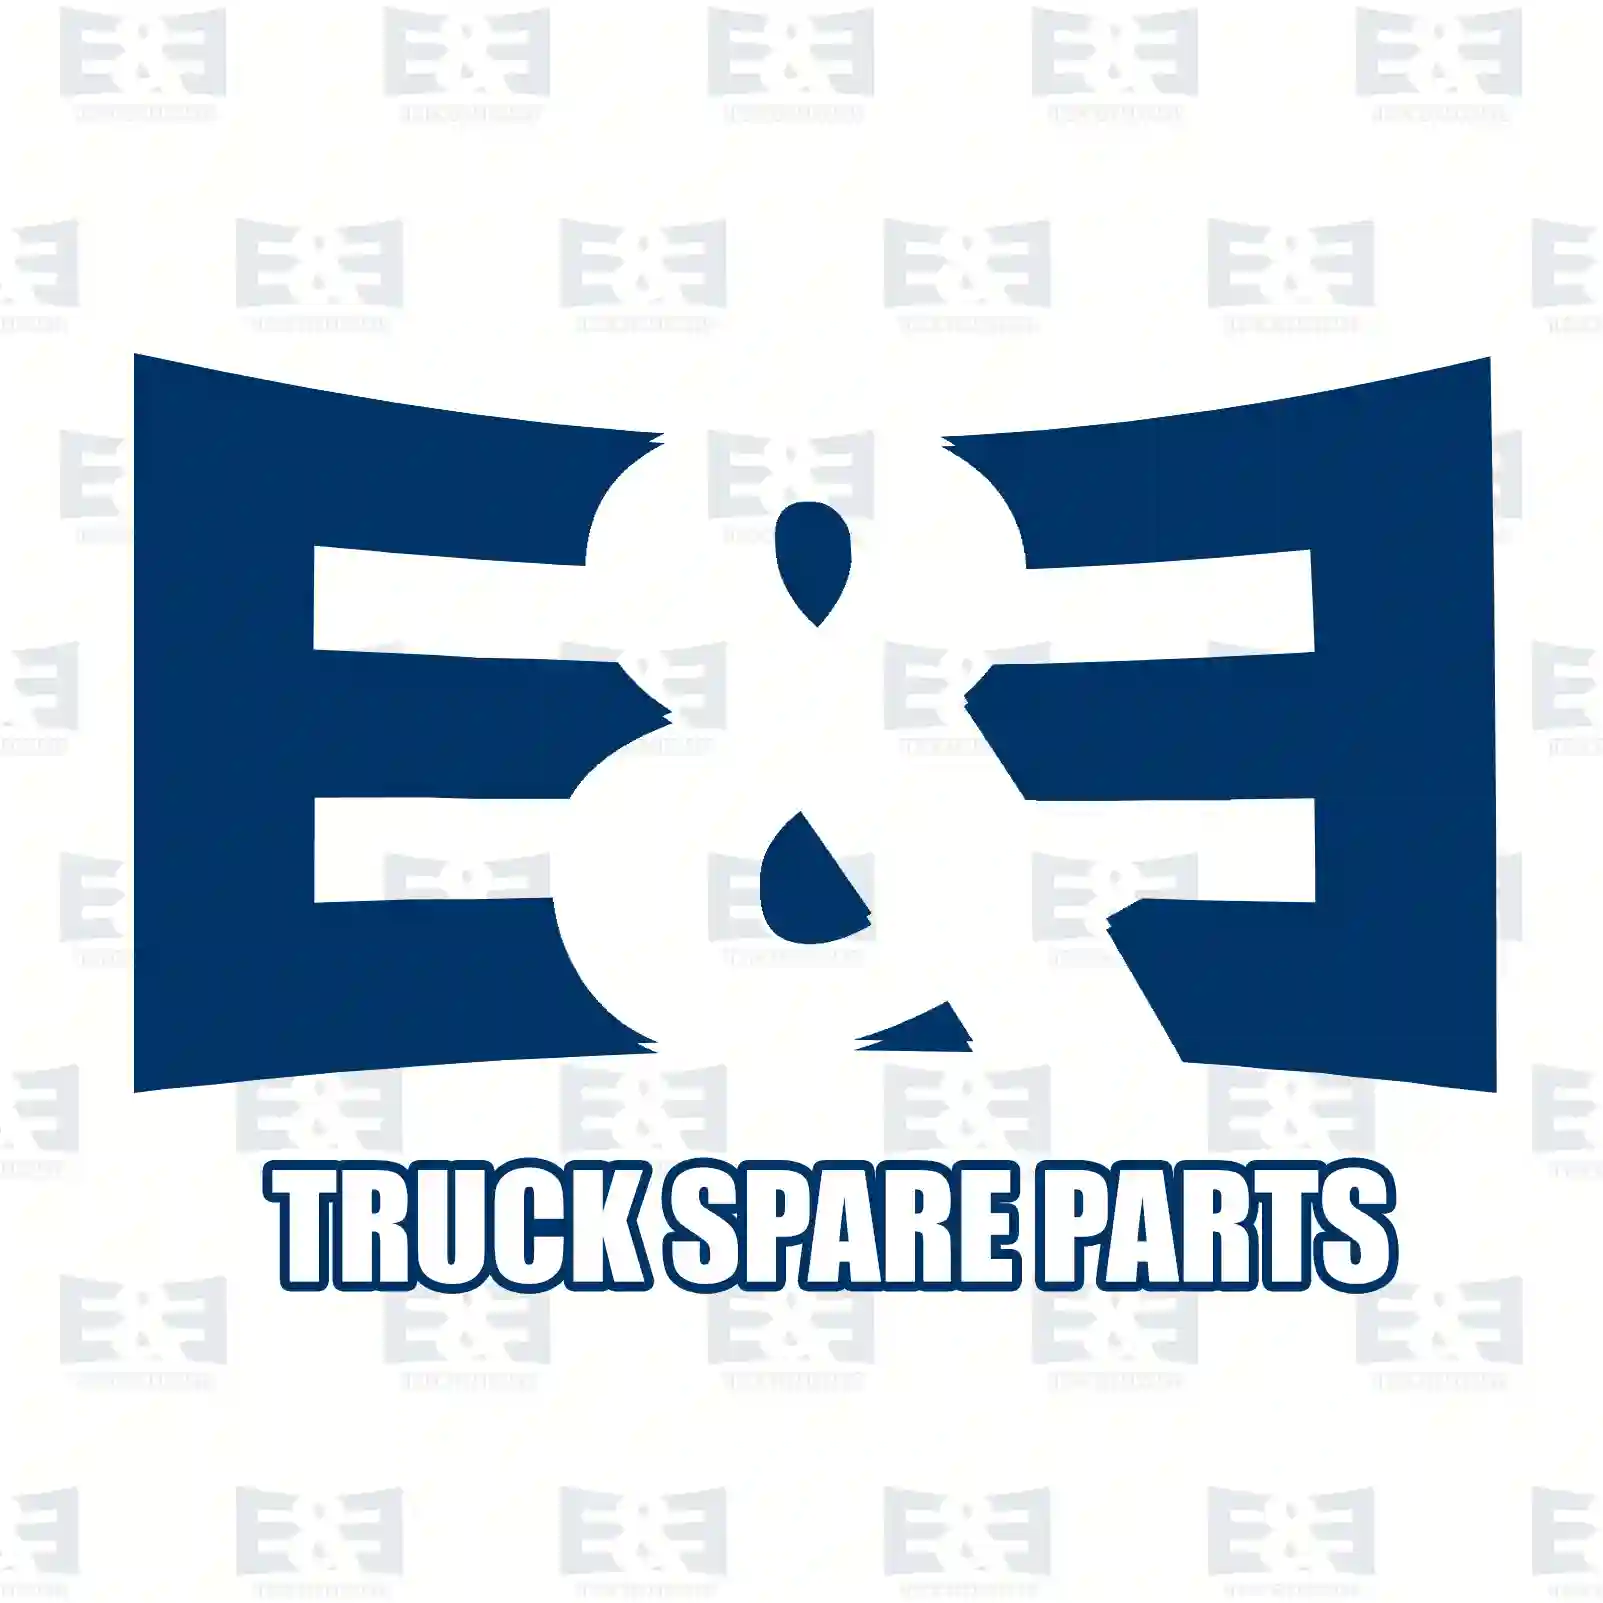 Suspension Buffer stop, EE No 2E2283792 ,  oem no:81962100488 E&E Truck Spare Parts | Truck Spare Parts, Auotomotive Spare Parts